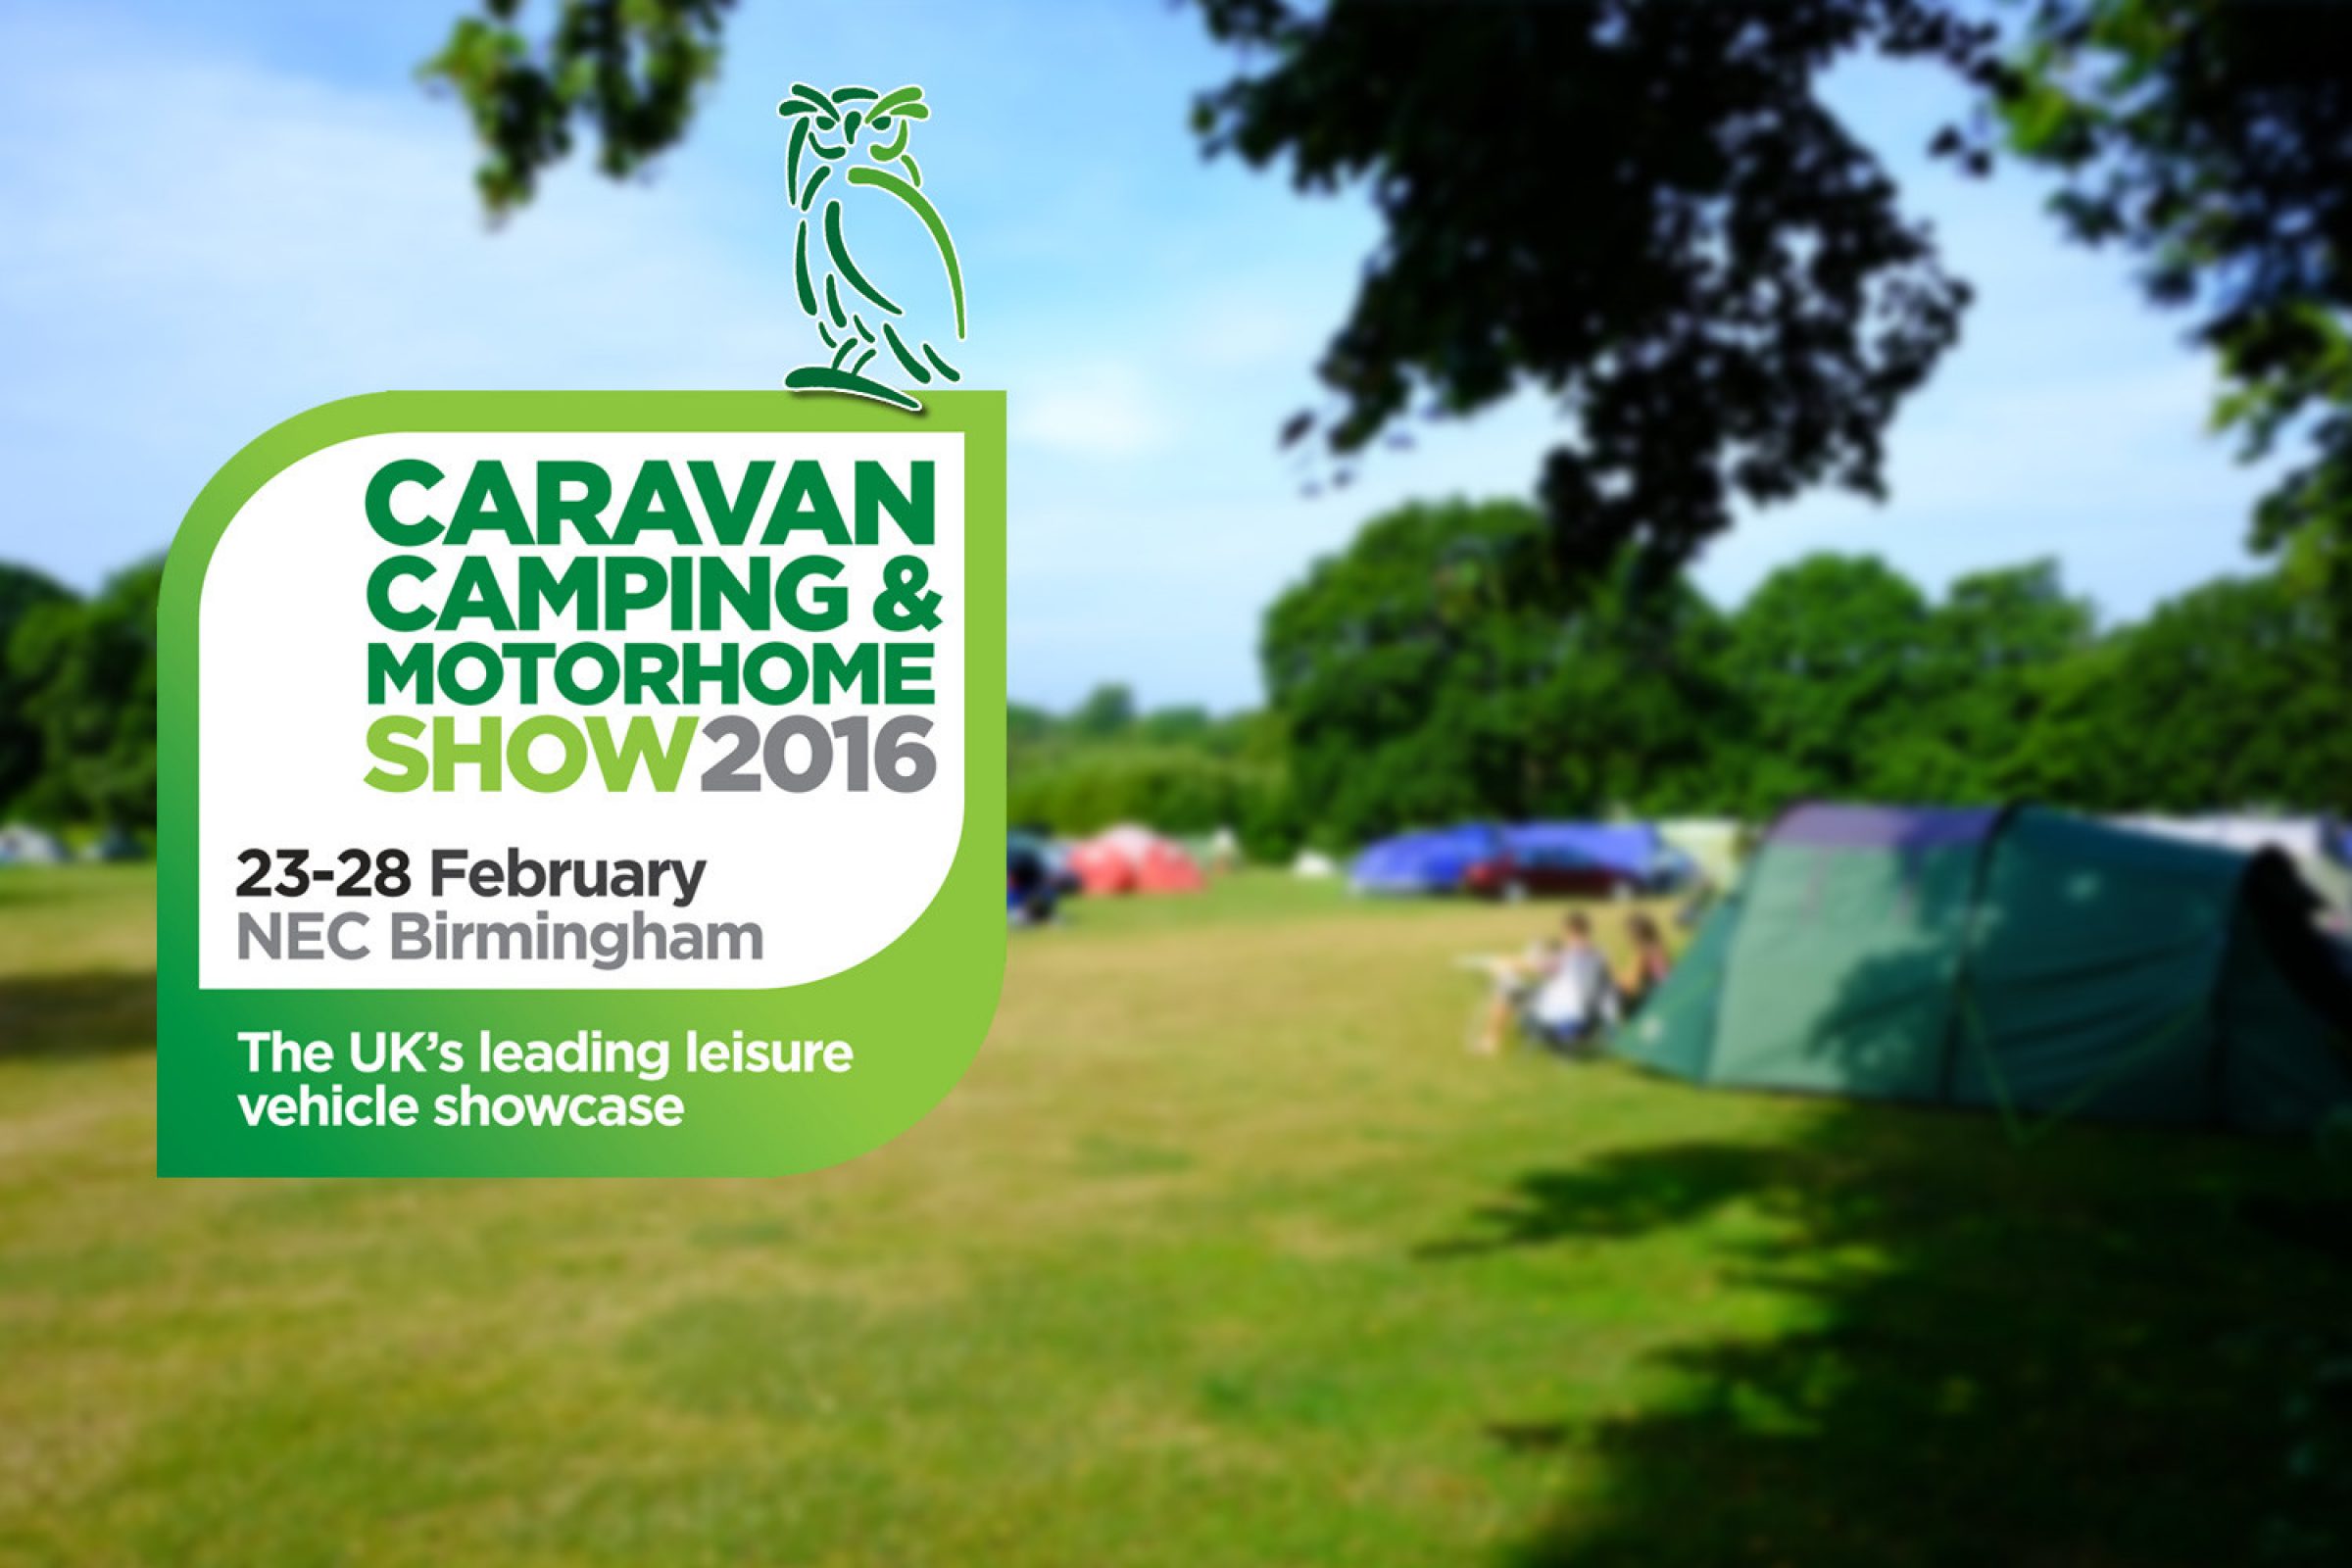 See us at the Caravan, Camping and Motorhome Show 2016